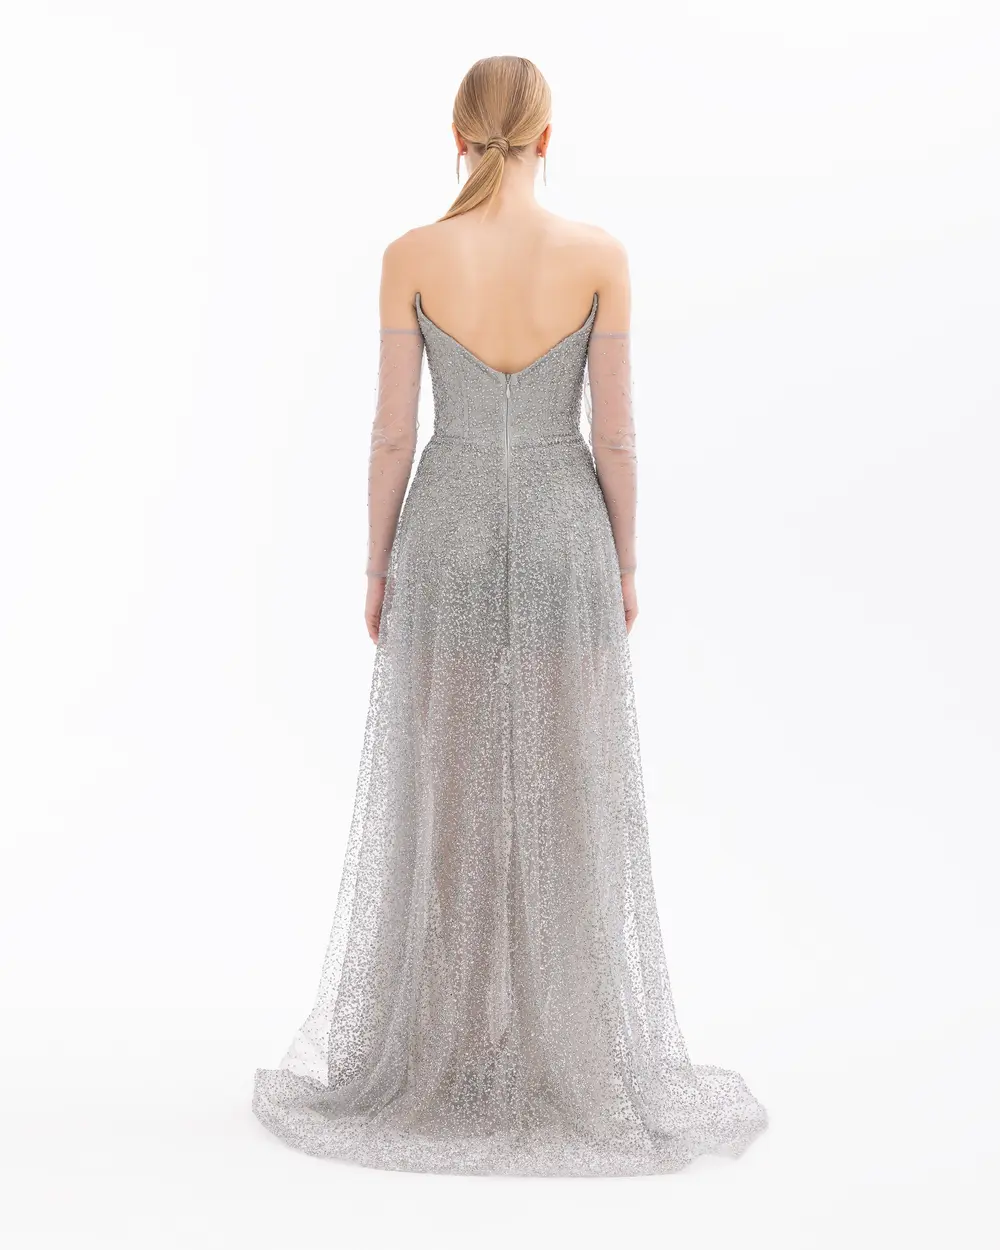 Silvery Strapless Maxi Length Evening Dress